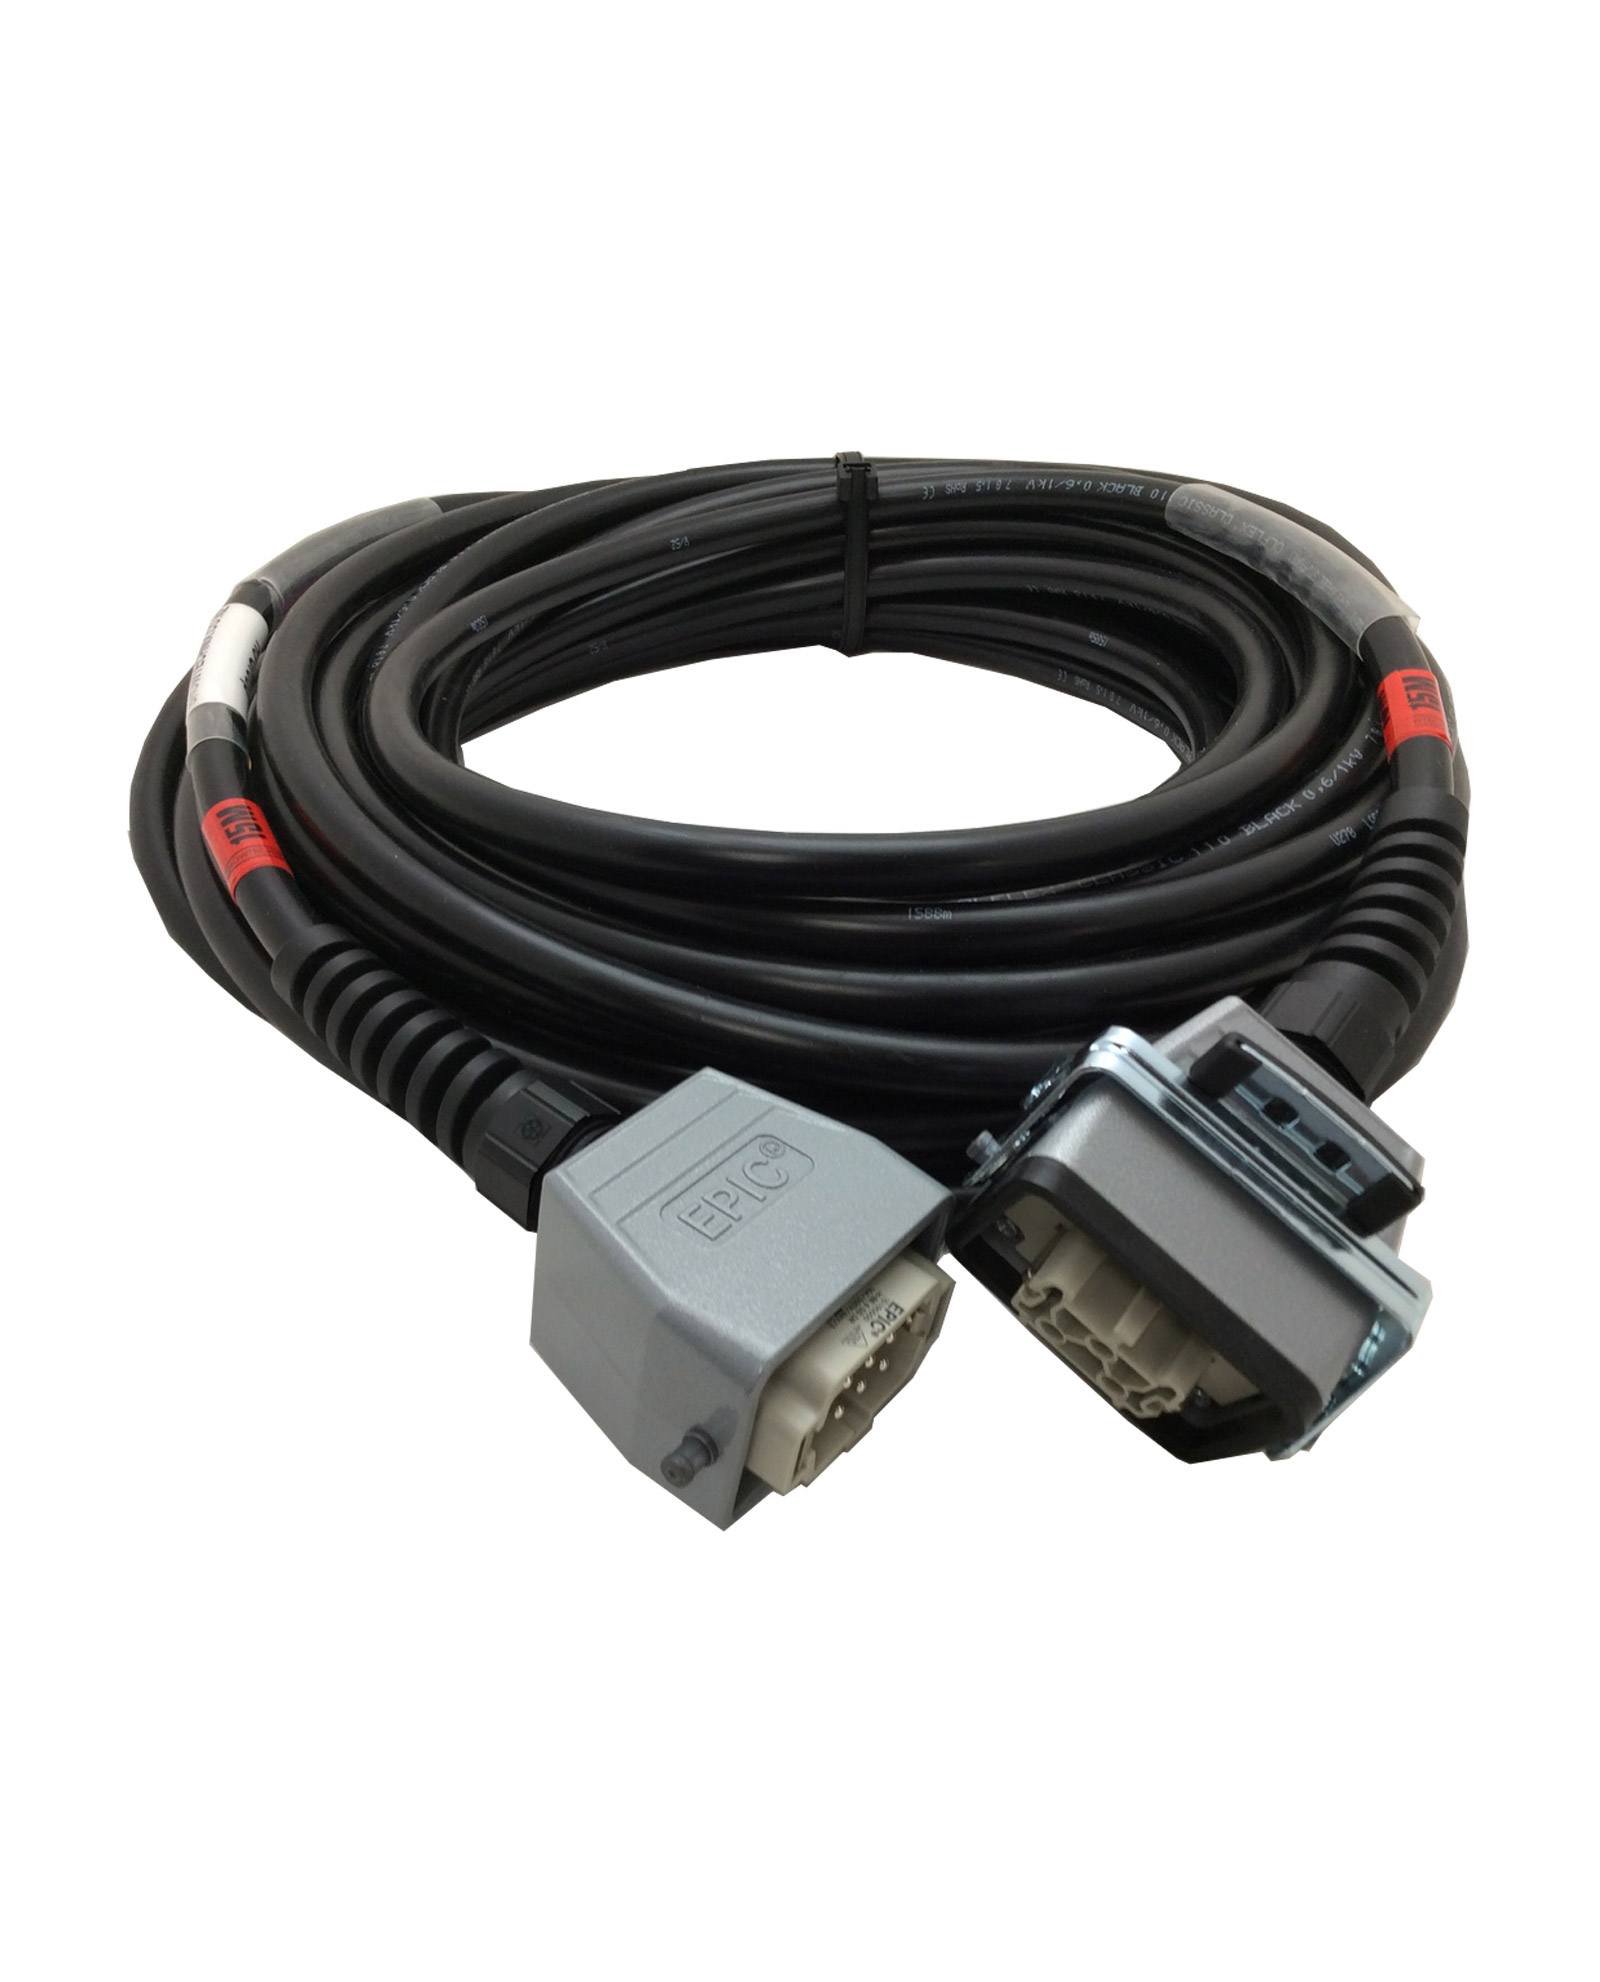 Nz Standard Motor Control Cable 6 Pole Wieland 1.5mm Black Or Grey